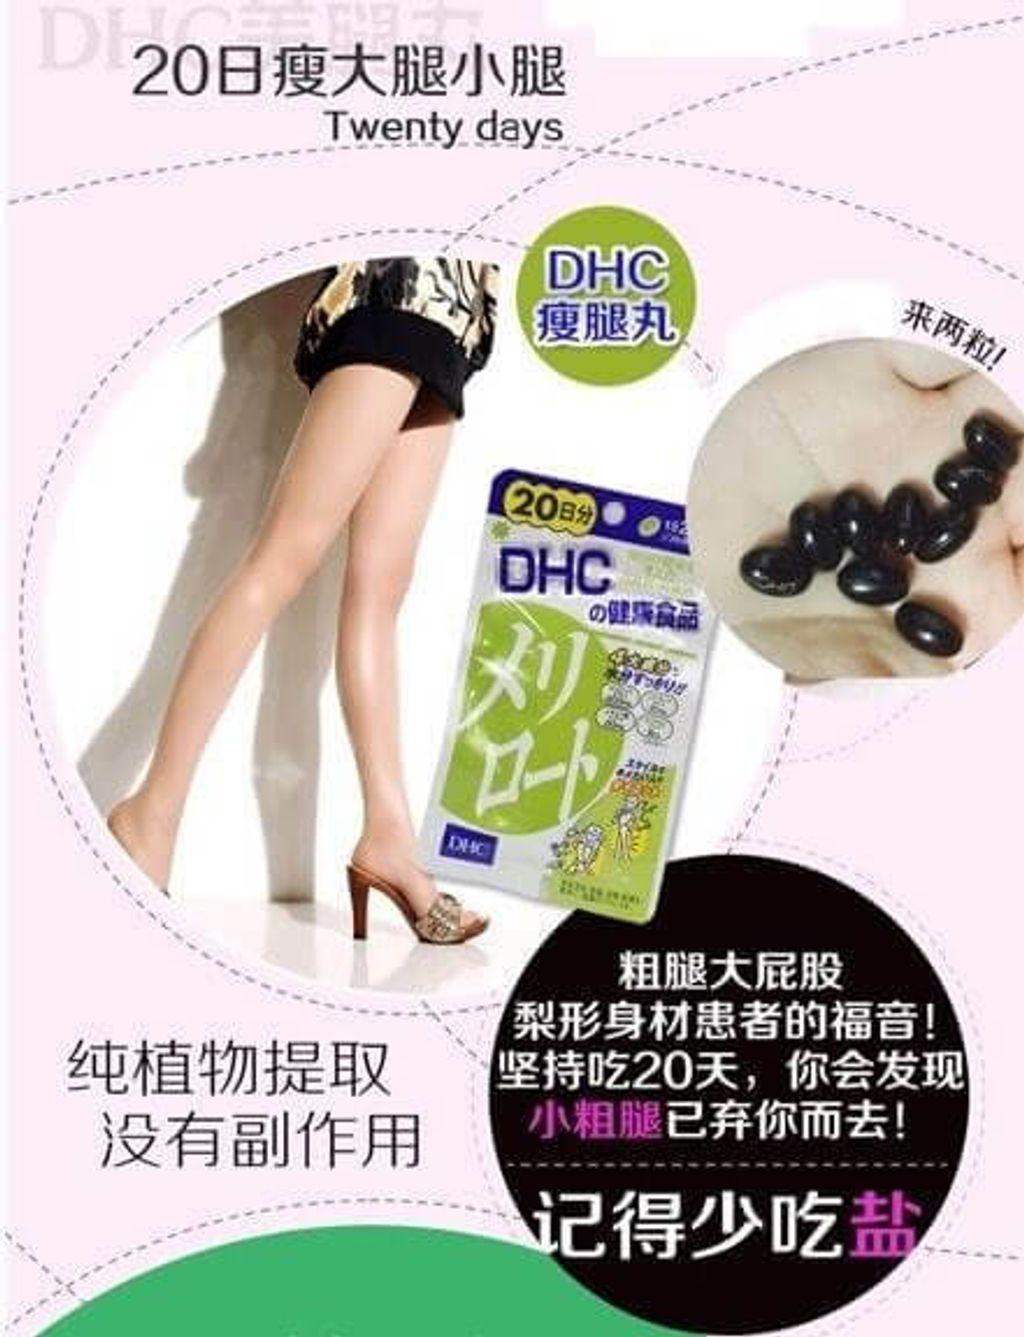 JuzBeauty_JuzBeautyMalaysia_JuzPretty_Authentic_Kbeauty_Malaysia_Skin_Care_Cosmetics_Jbeauty_Australia_Health_Care_DHC_Lower_Body_Slimming_Tablets_For_Slimming_Legs_ (3).jpg